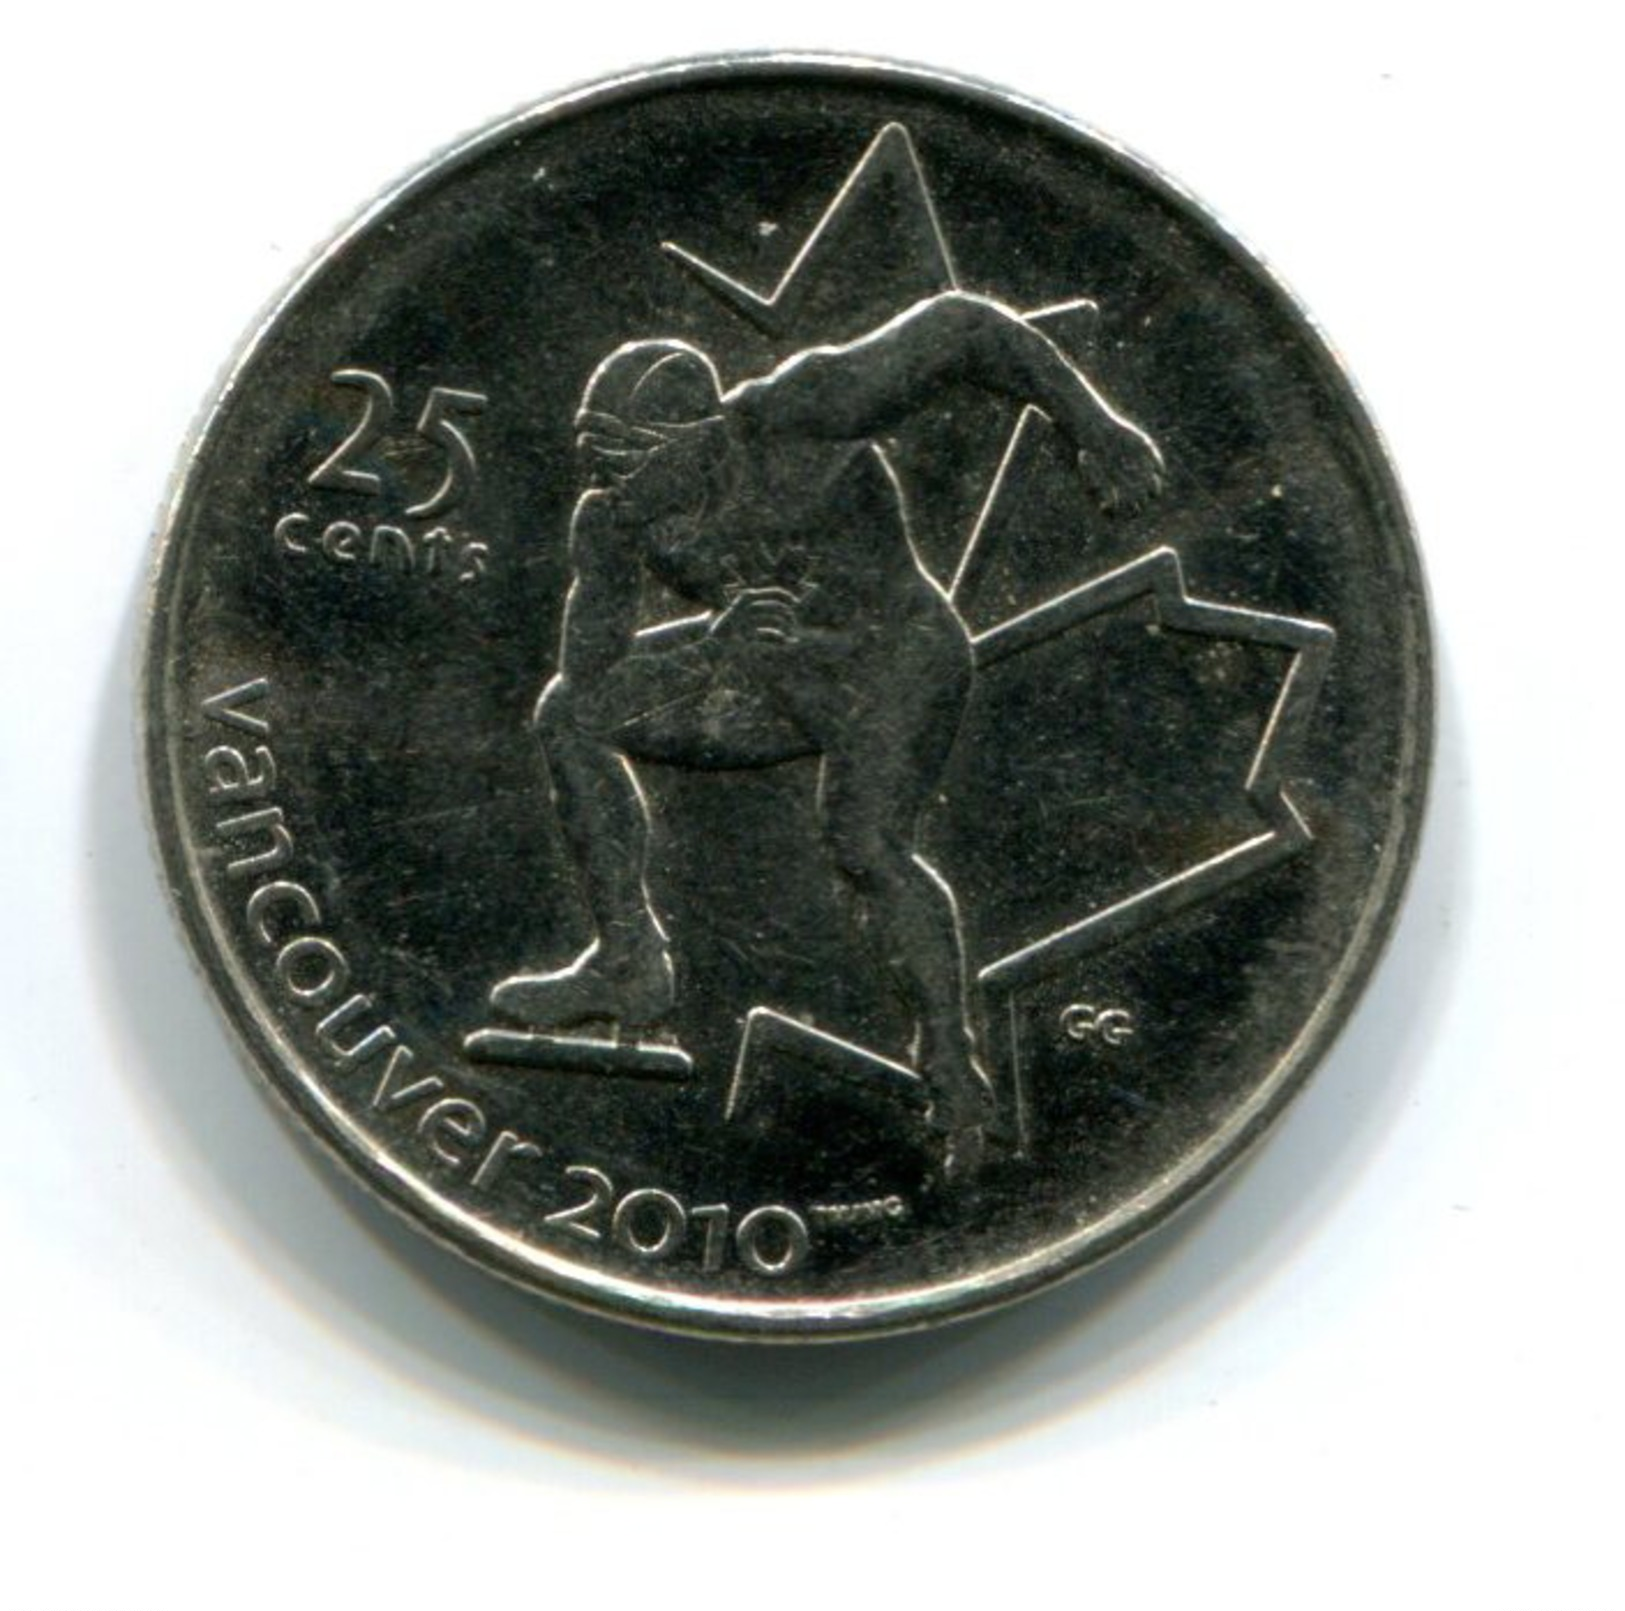 2009 Canada Vancouver Winter Olympics 2010 Commemorative 25c Coin - Canada